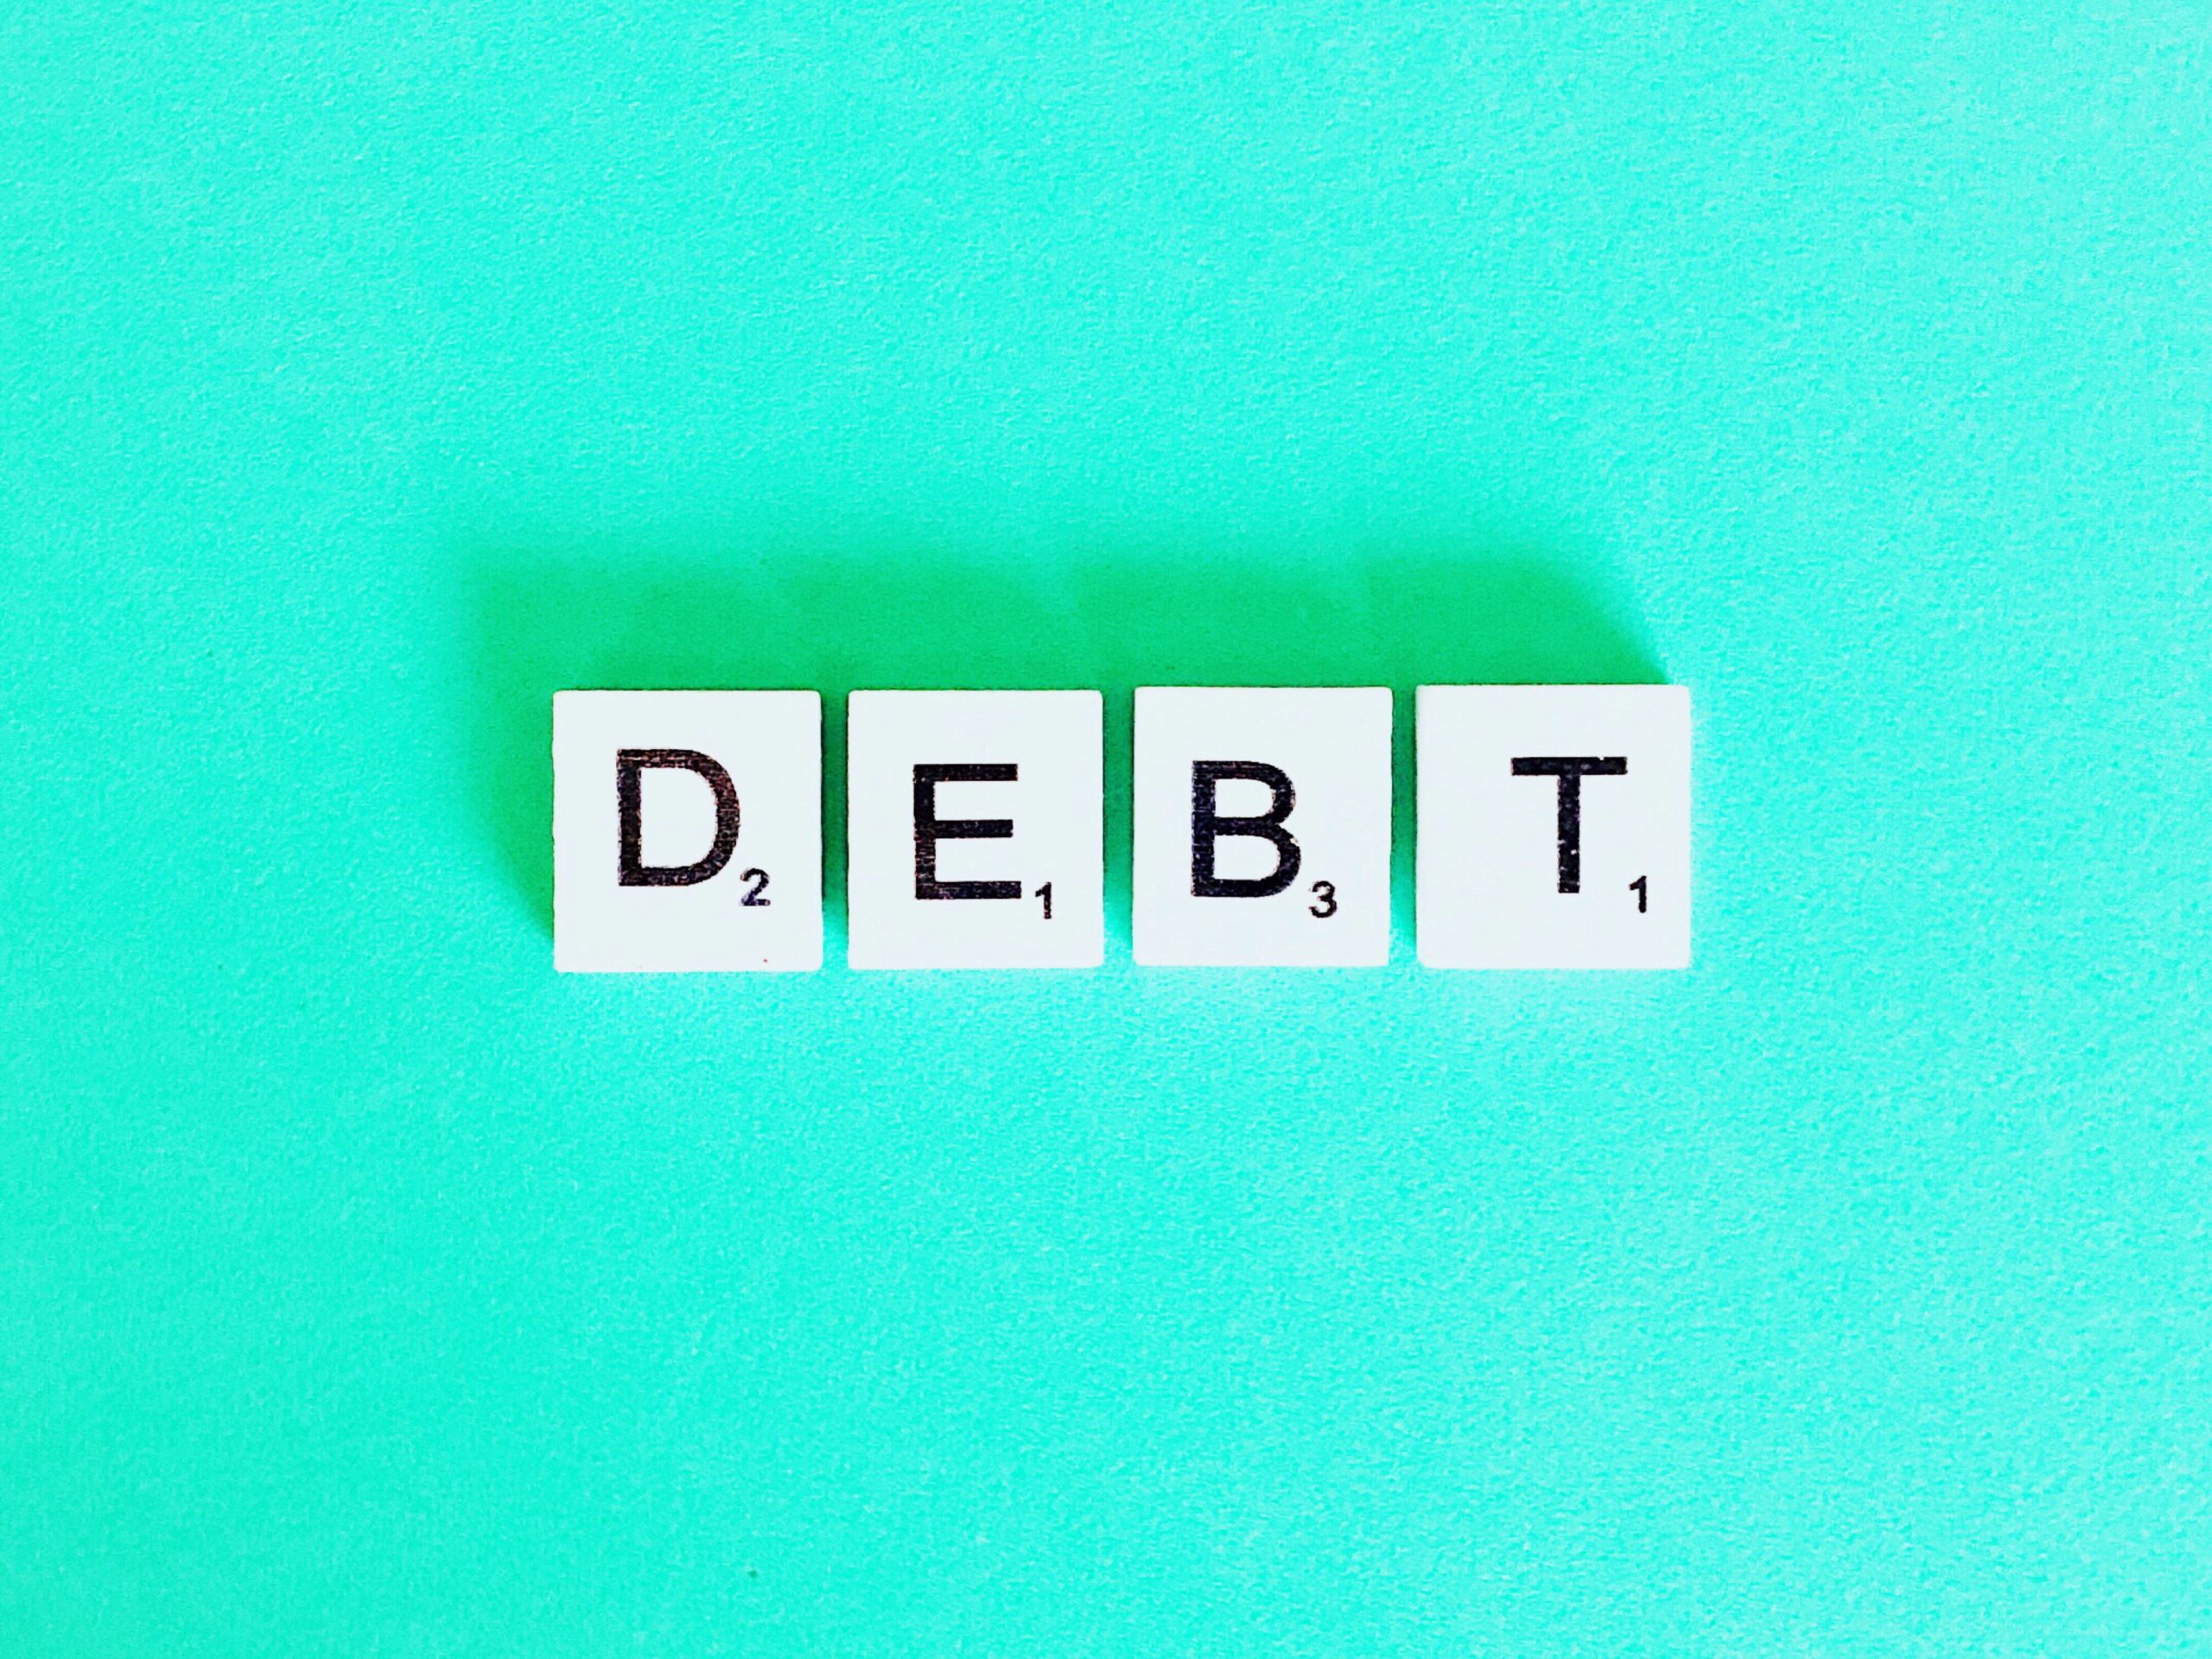 Professional Debt Services